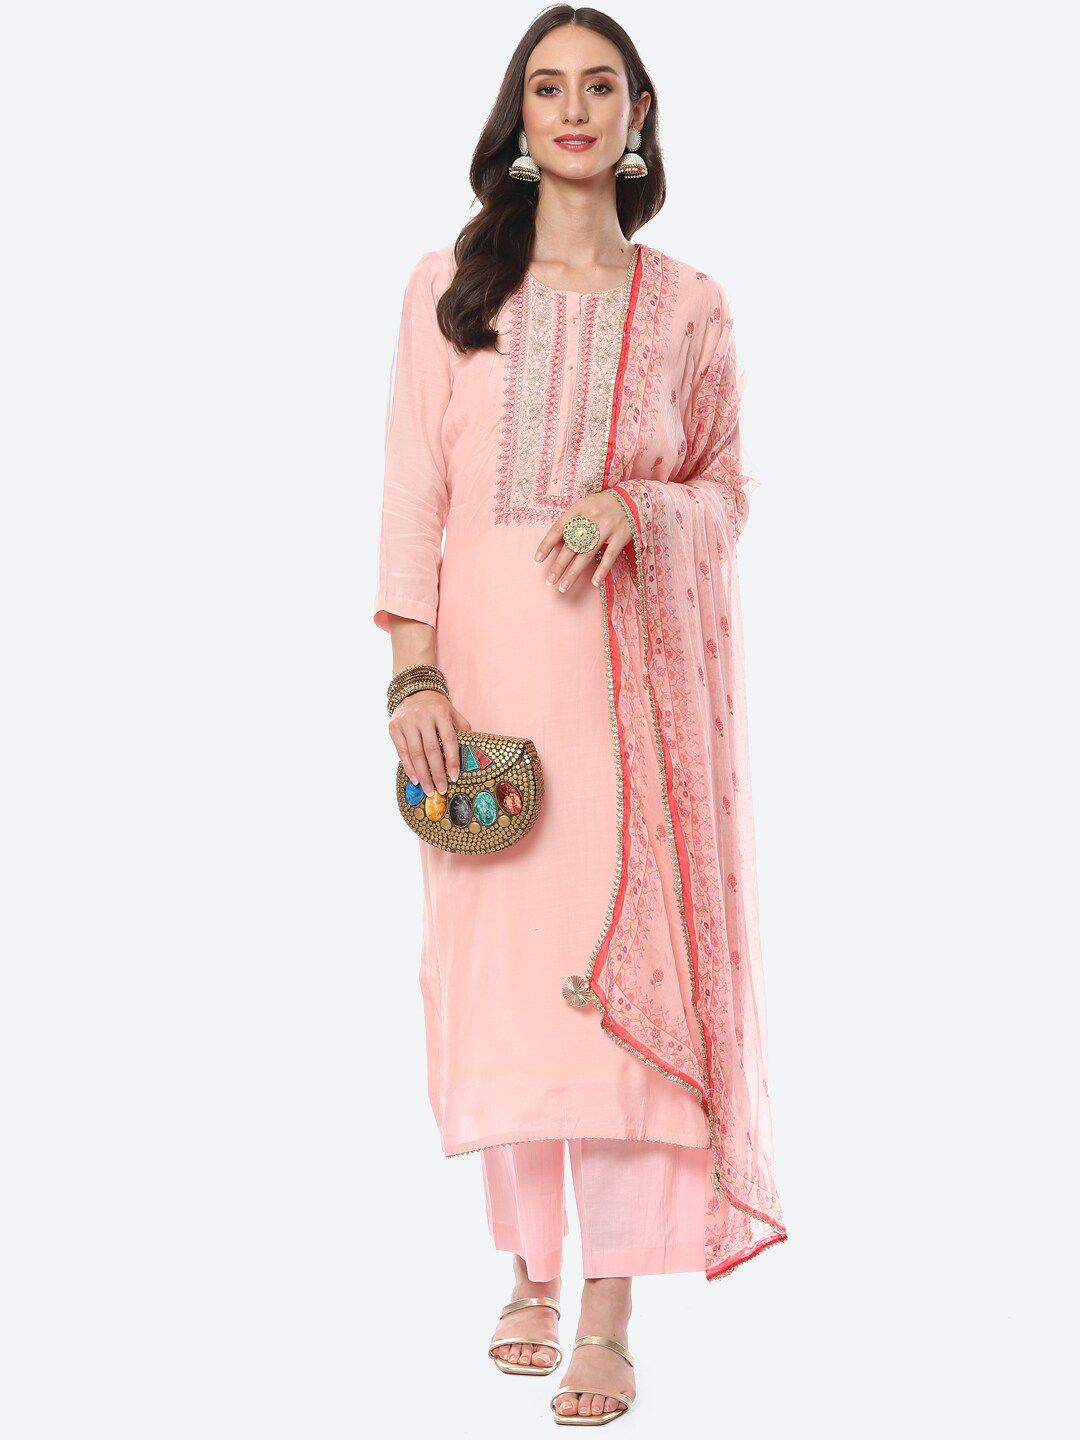 Meena Bazaar Pink Embroidered Unstitched Dress Material Price in India